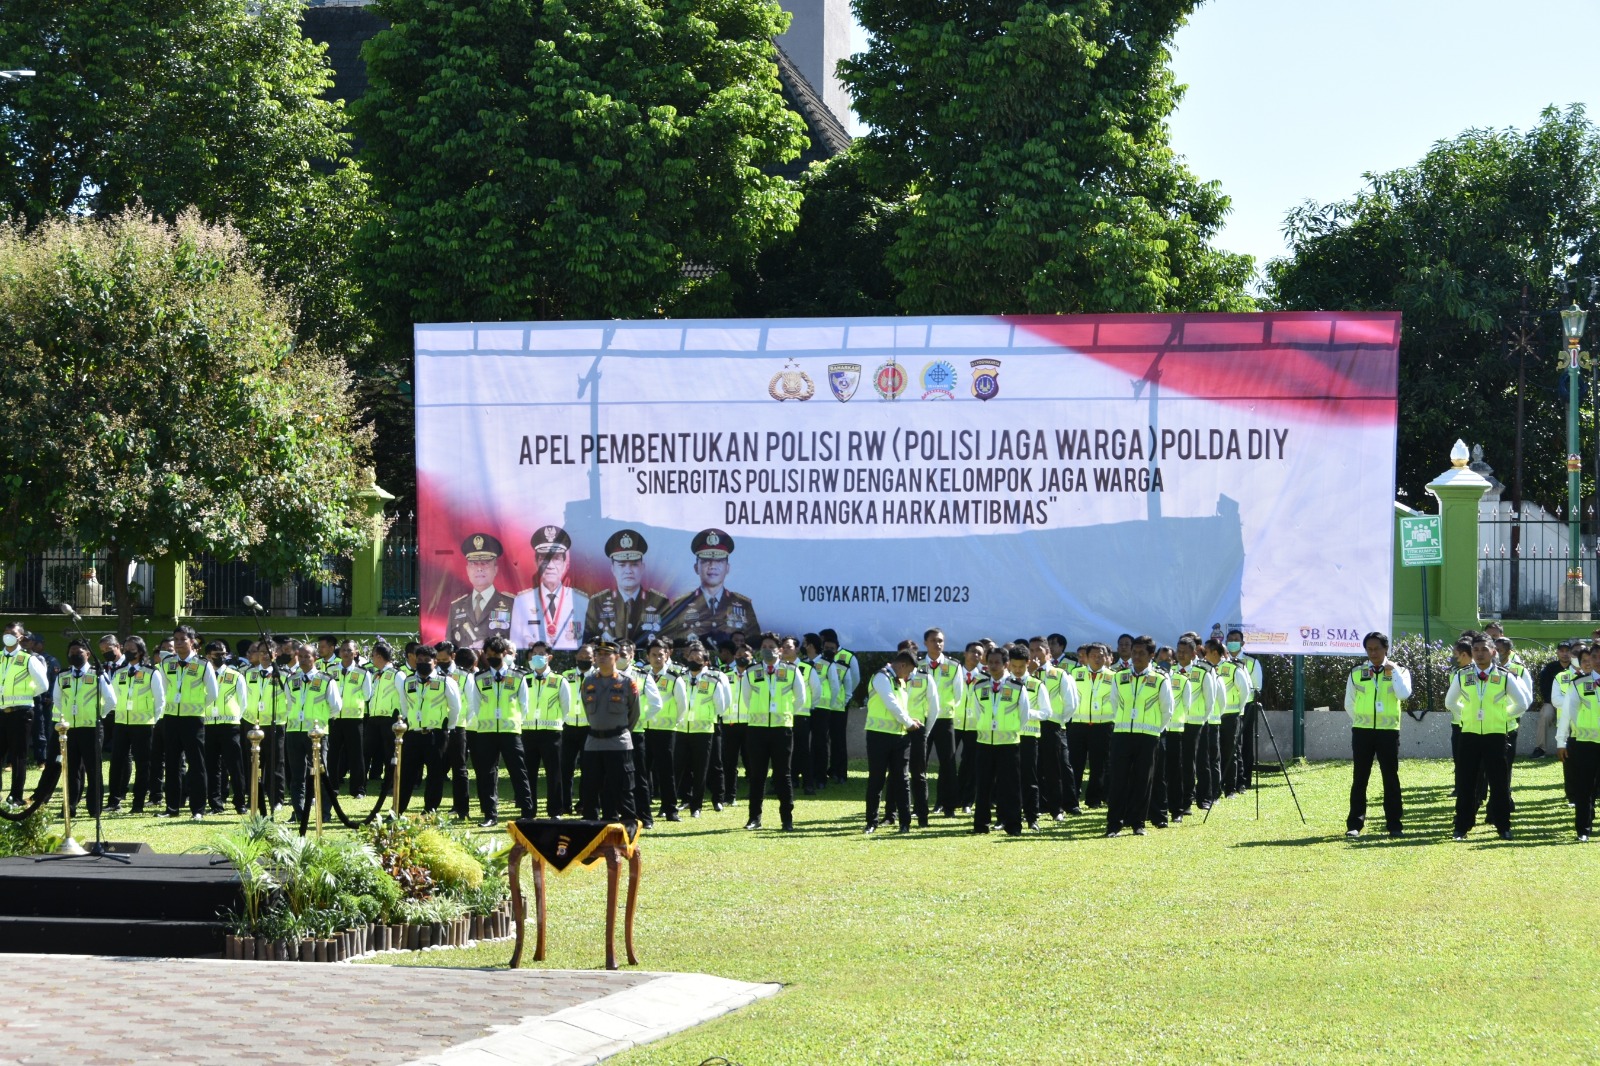 Ketua Pengadilan Negeri Yogyakarta Hadir dalam Launching Polisi RW/Polisi Jaga Warga